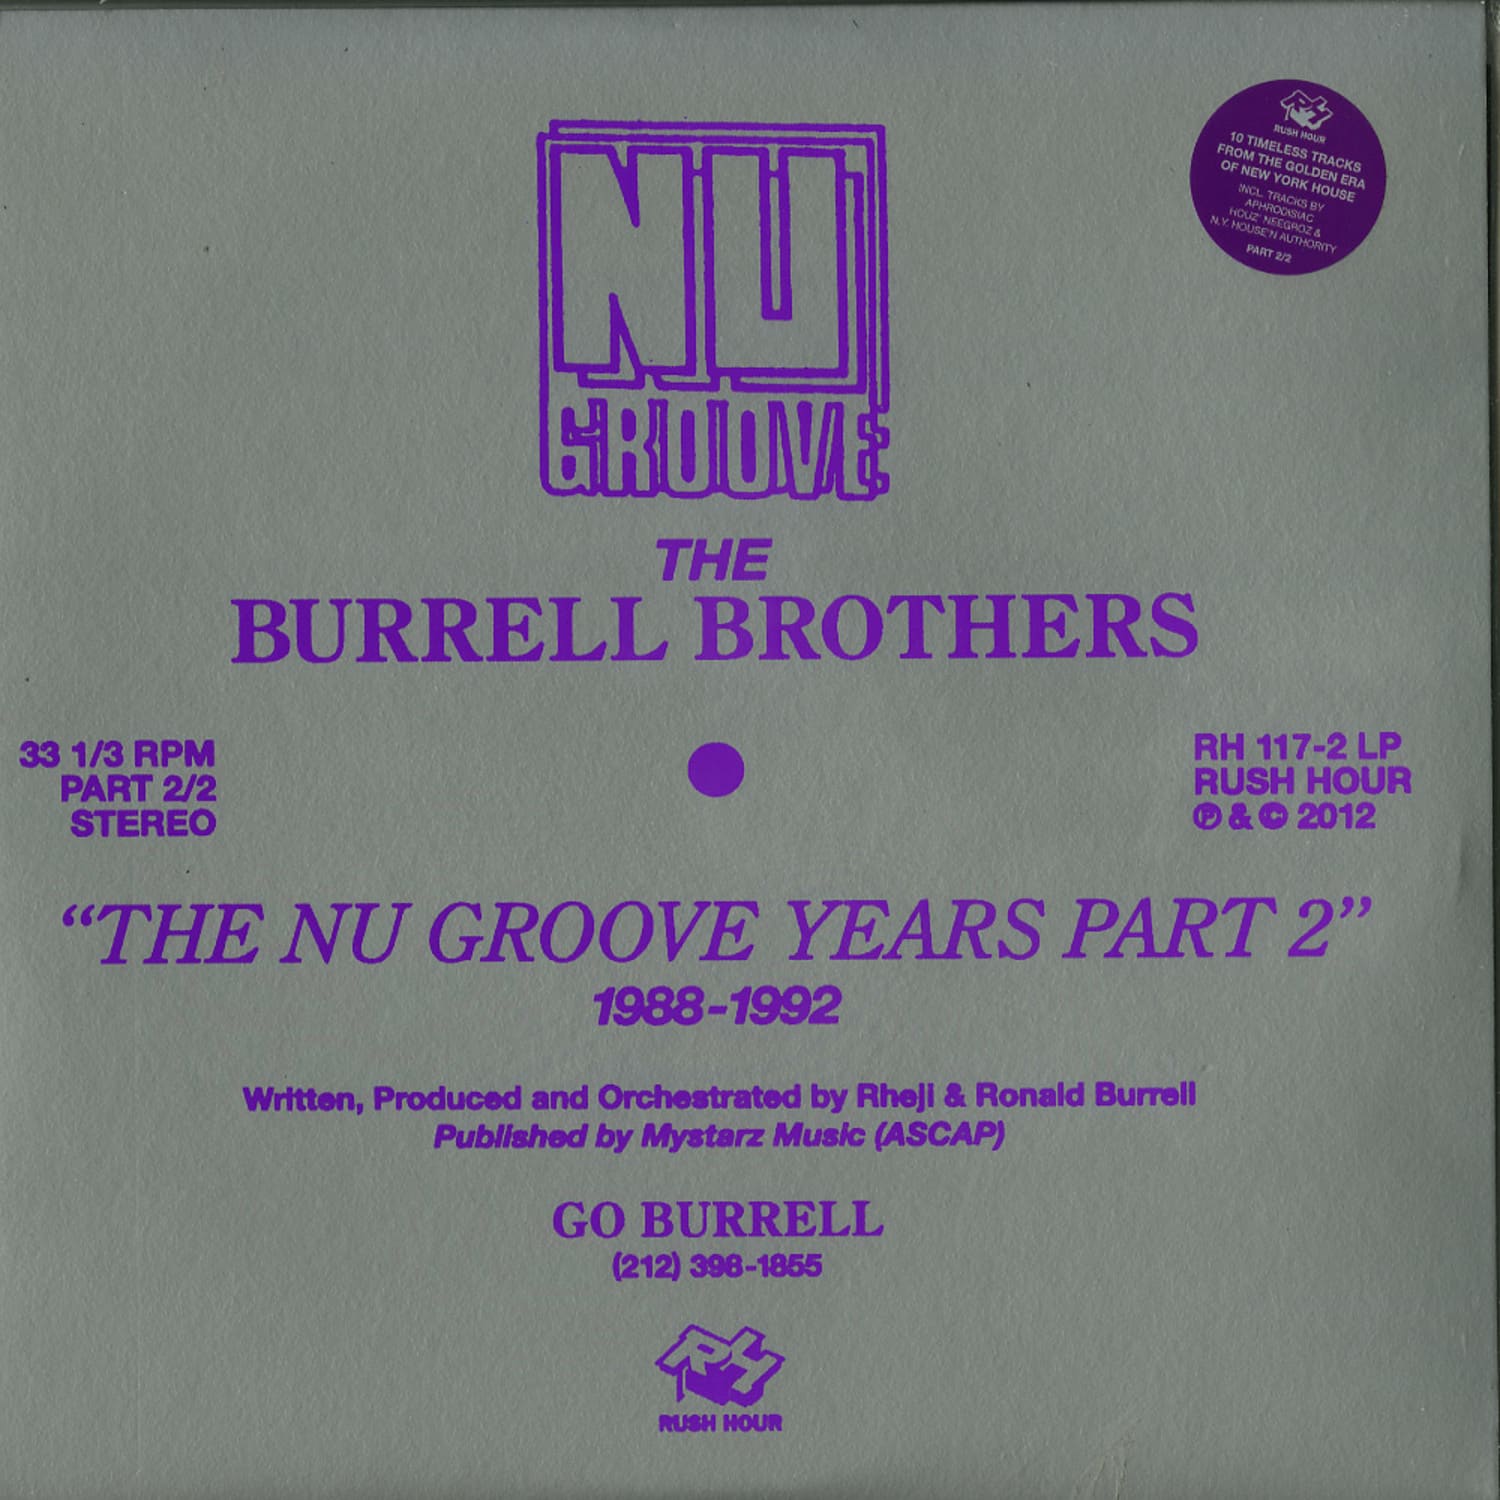 The Burrell Brothers - THE BURRELL BROTHERS - THE NU GROOVE YEARS LP 2 